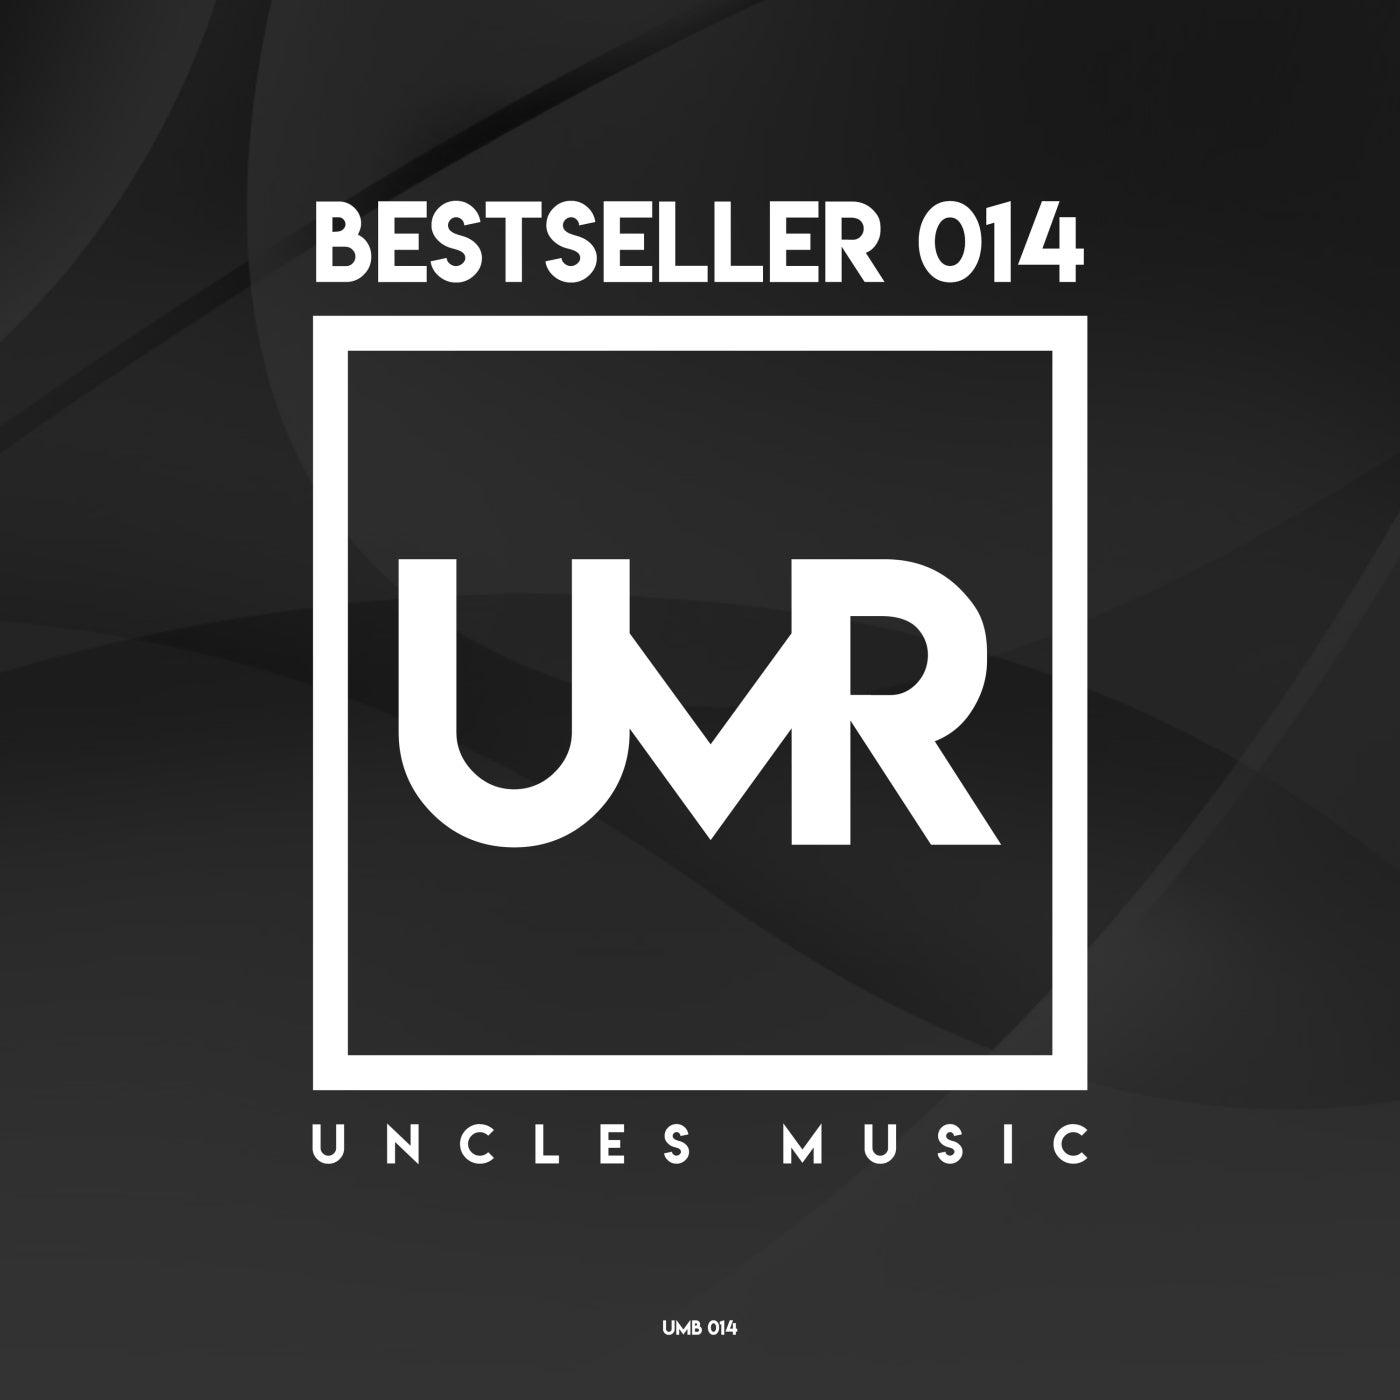 Uncles Music "Bestseller 014"